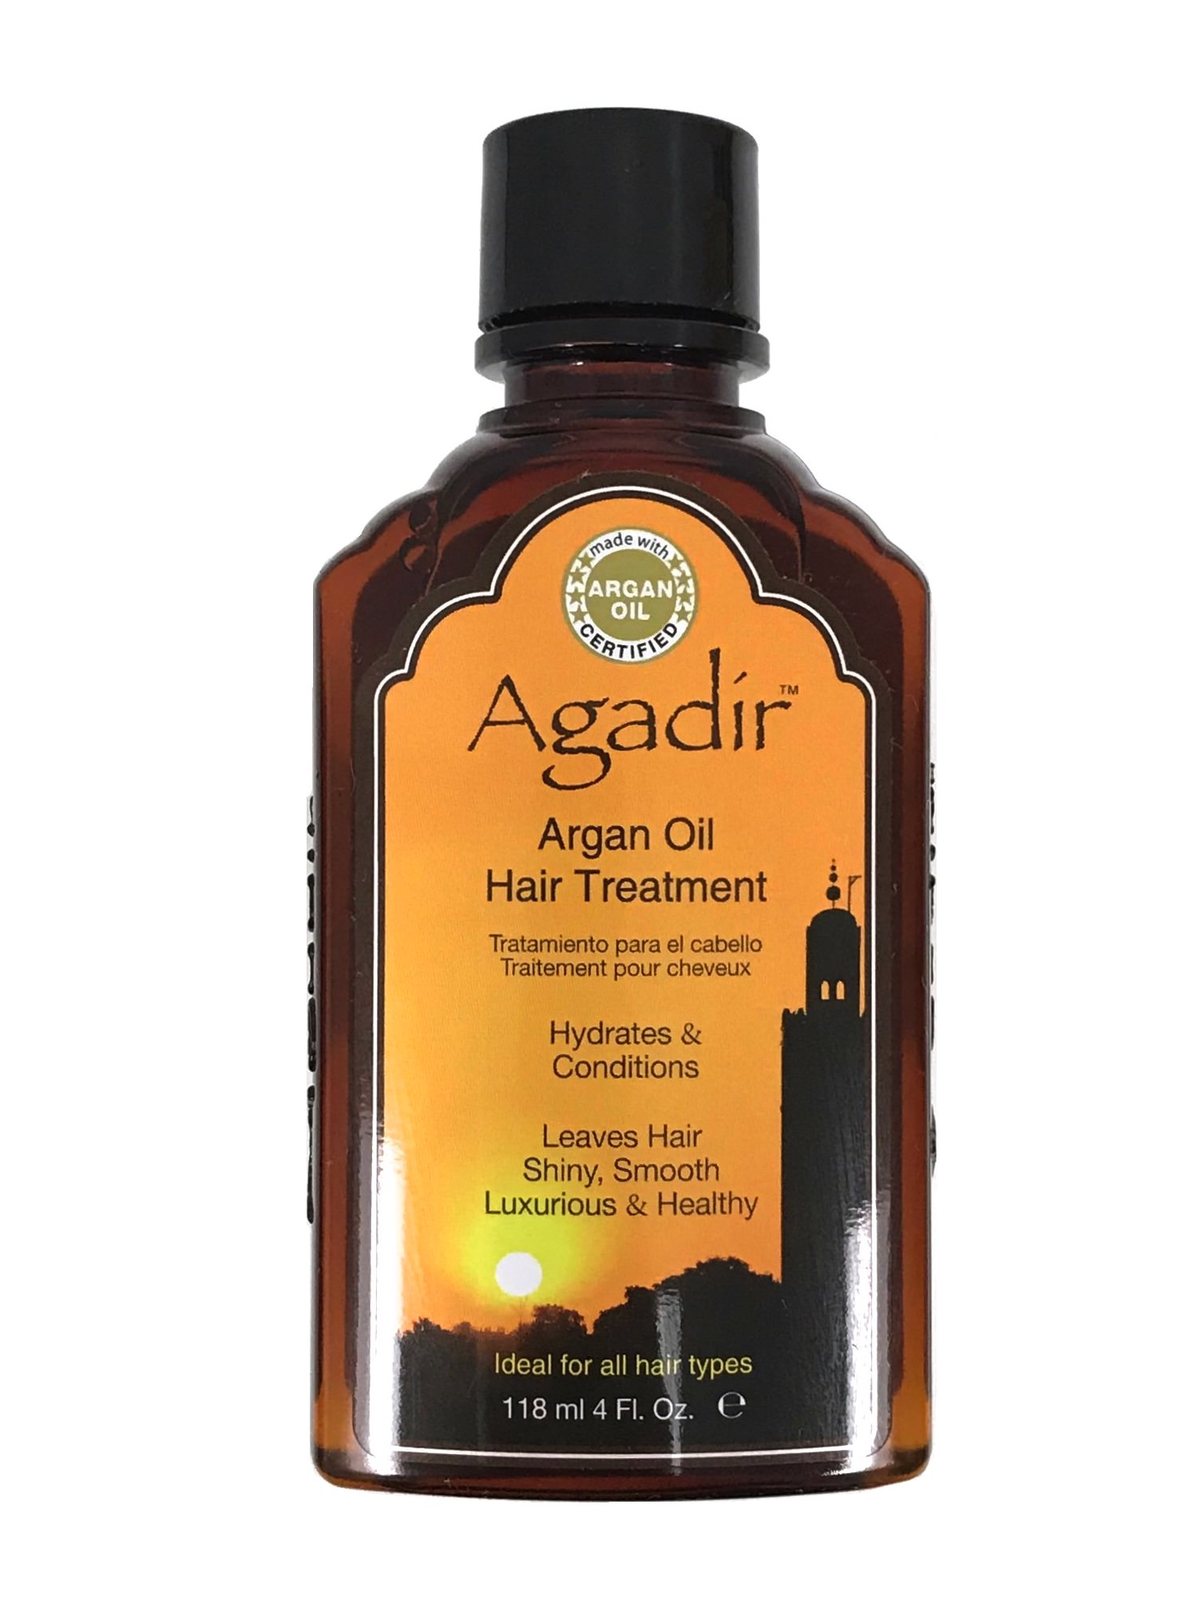 Agadir Argan Oil Hair Treatment  4oz - $35.38